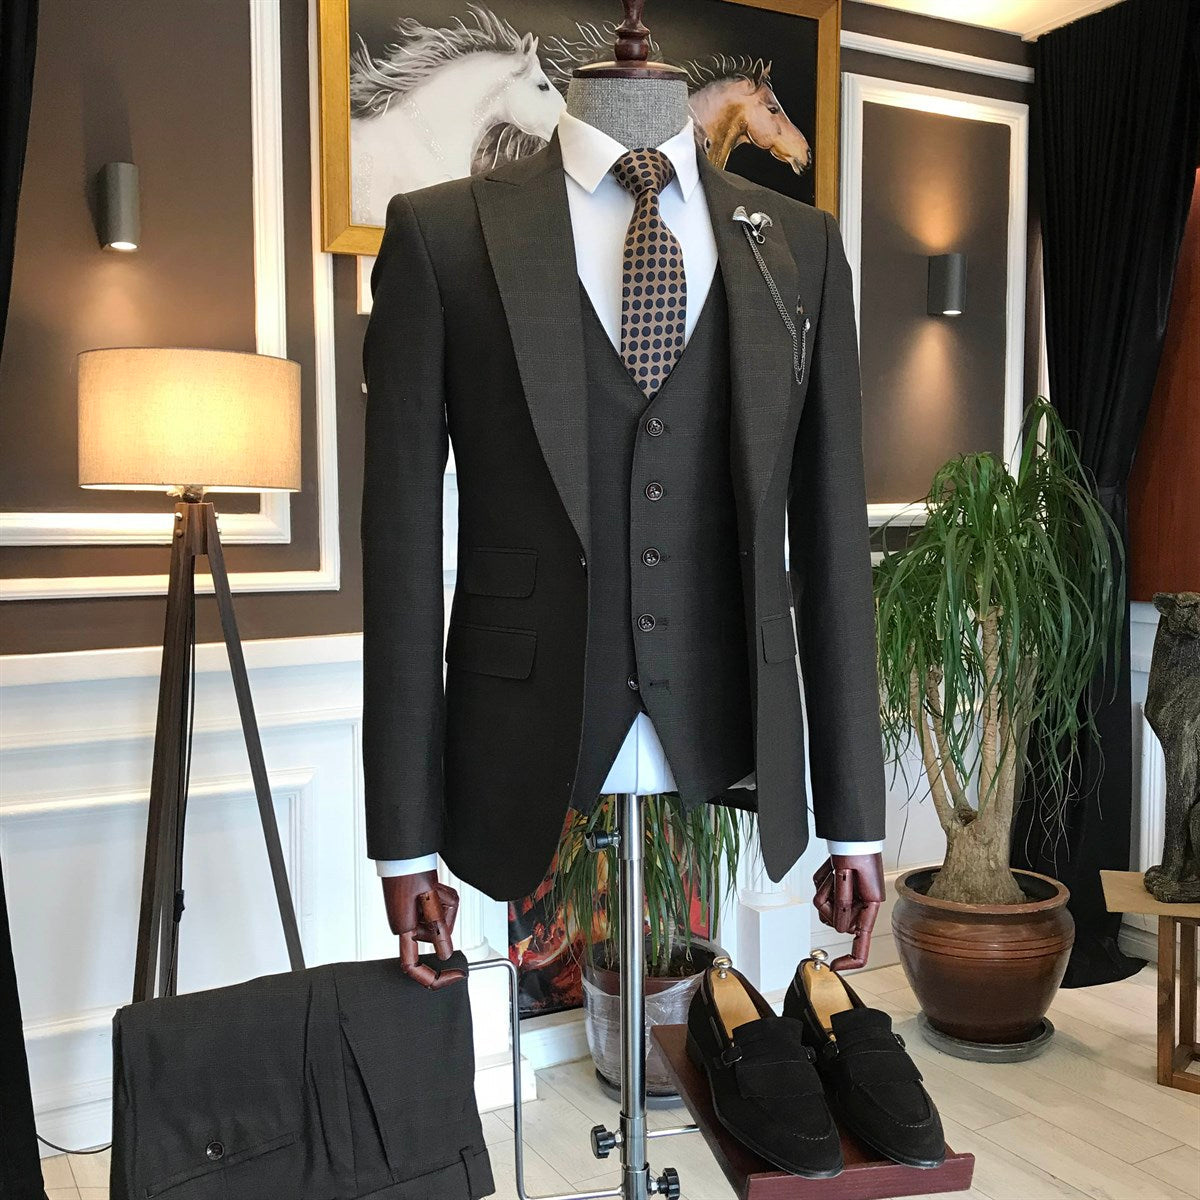 Bojoni Brown Plaid Slim-Fit Suit 3-Piece 